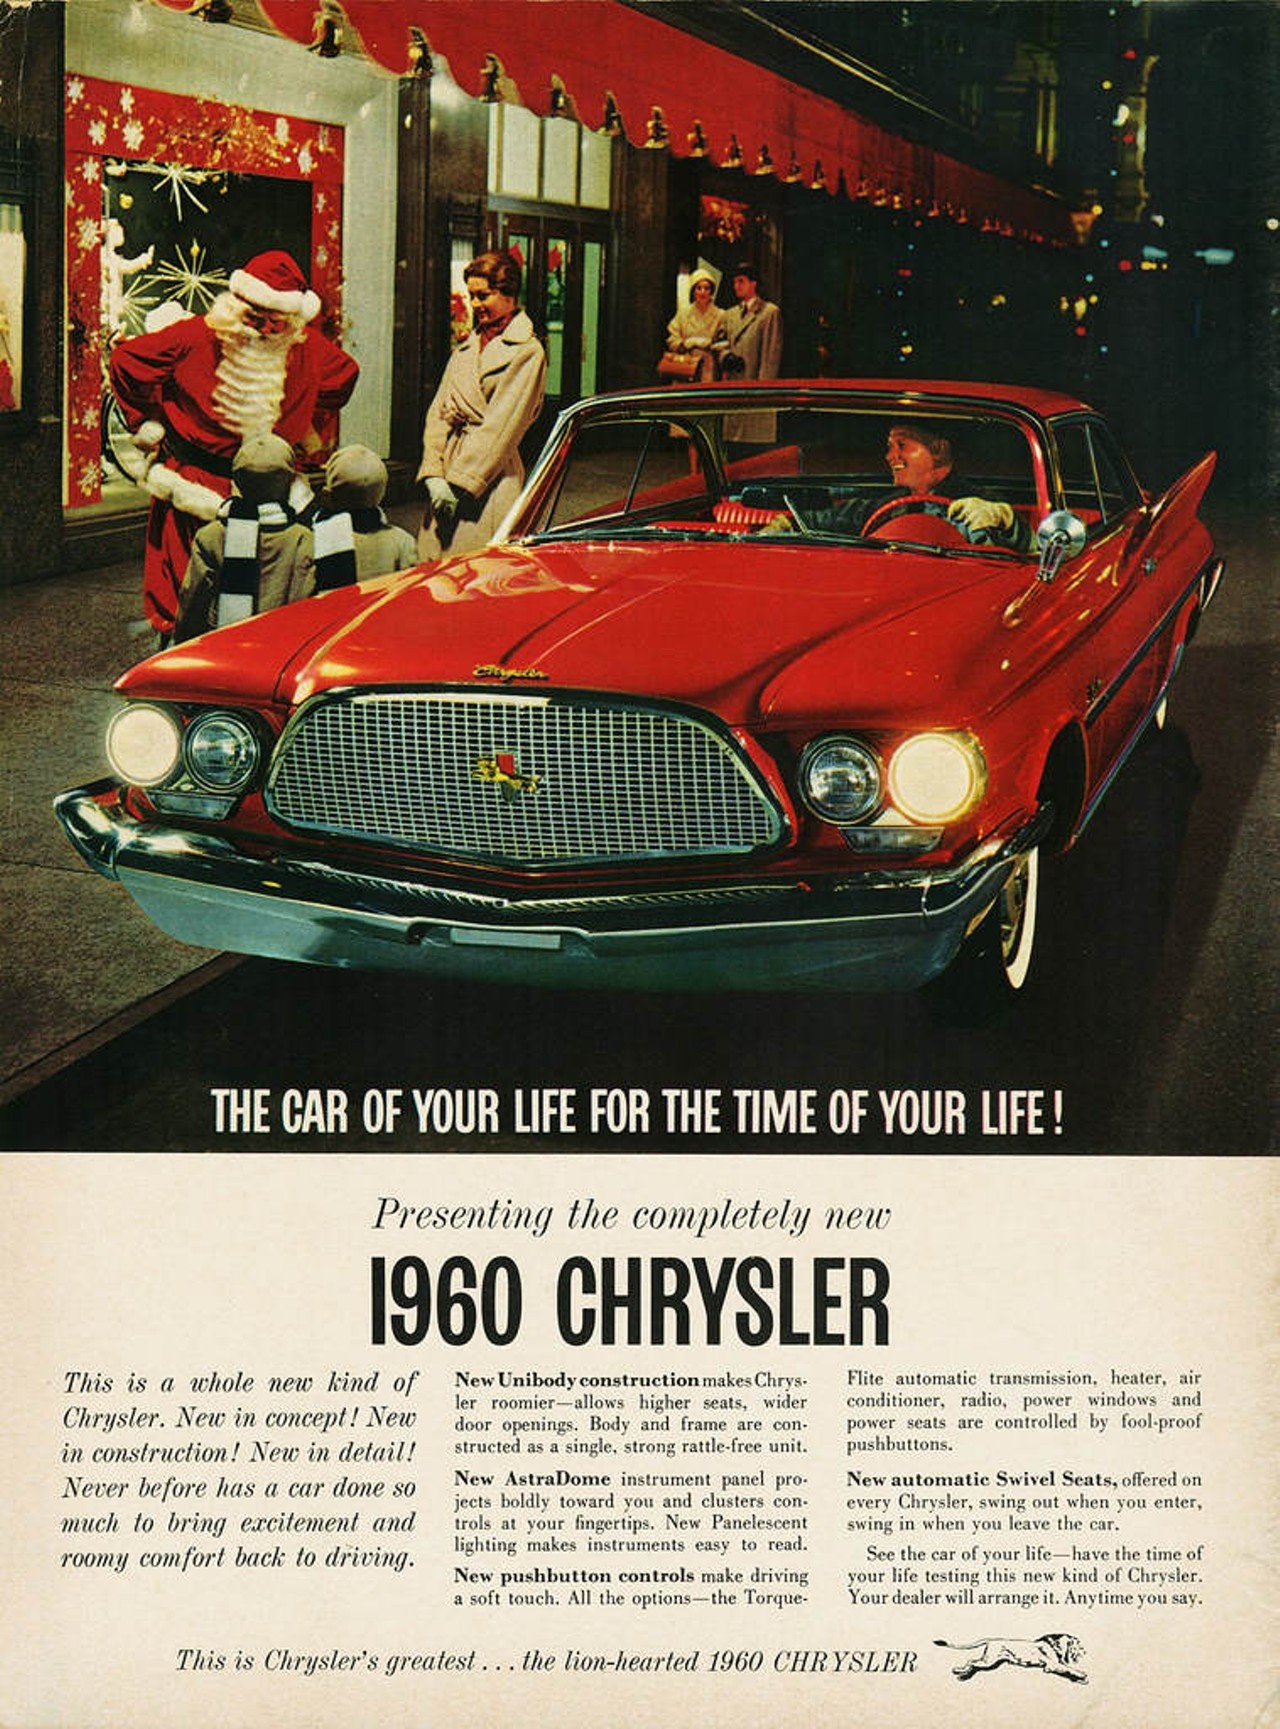 Chrysler Windsor 2-Door Hardtop at Christmas, 1960 (Image courtesy of Alden Jewell, Flickr Creative Commons)